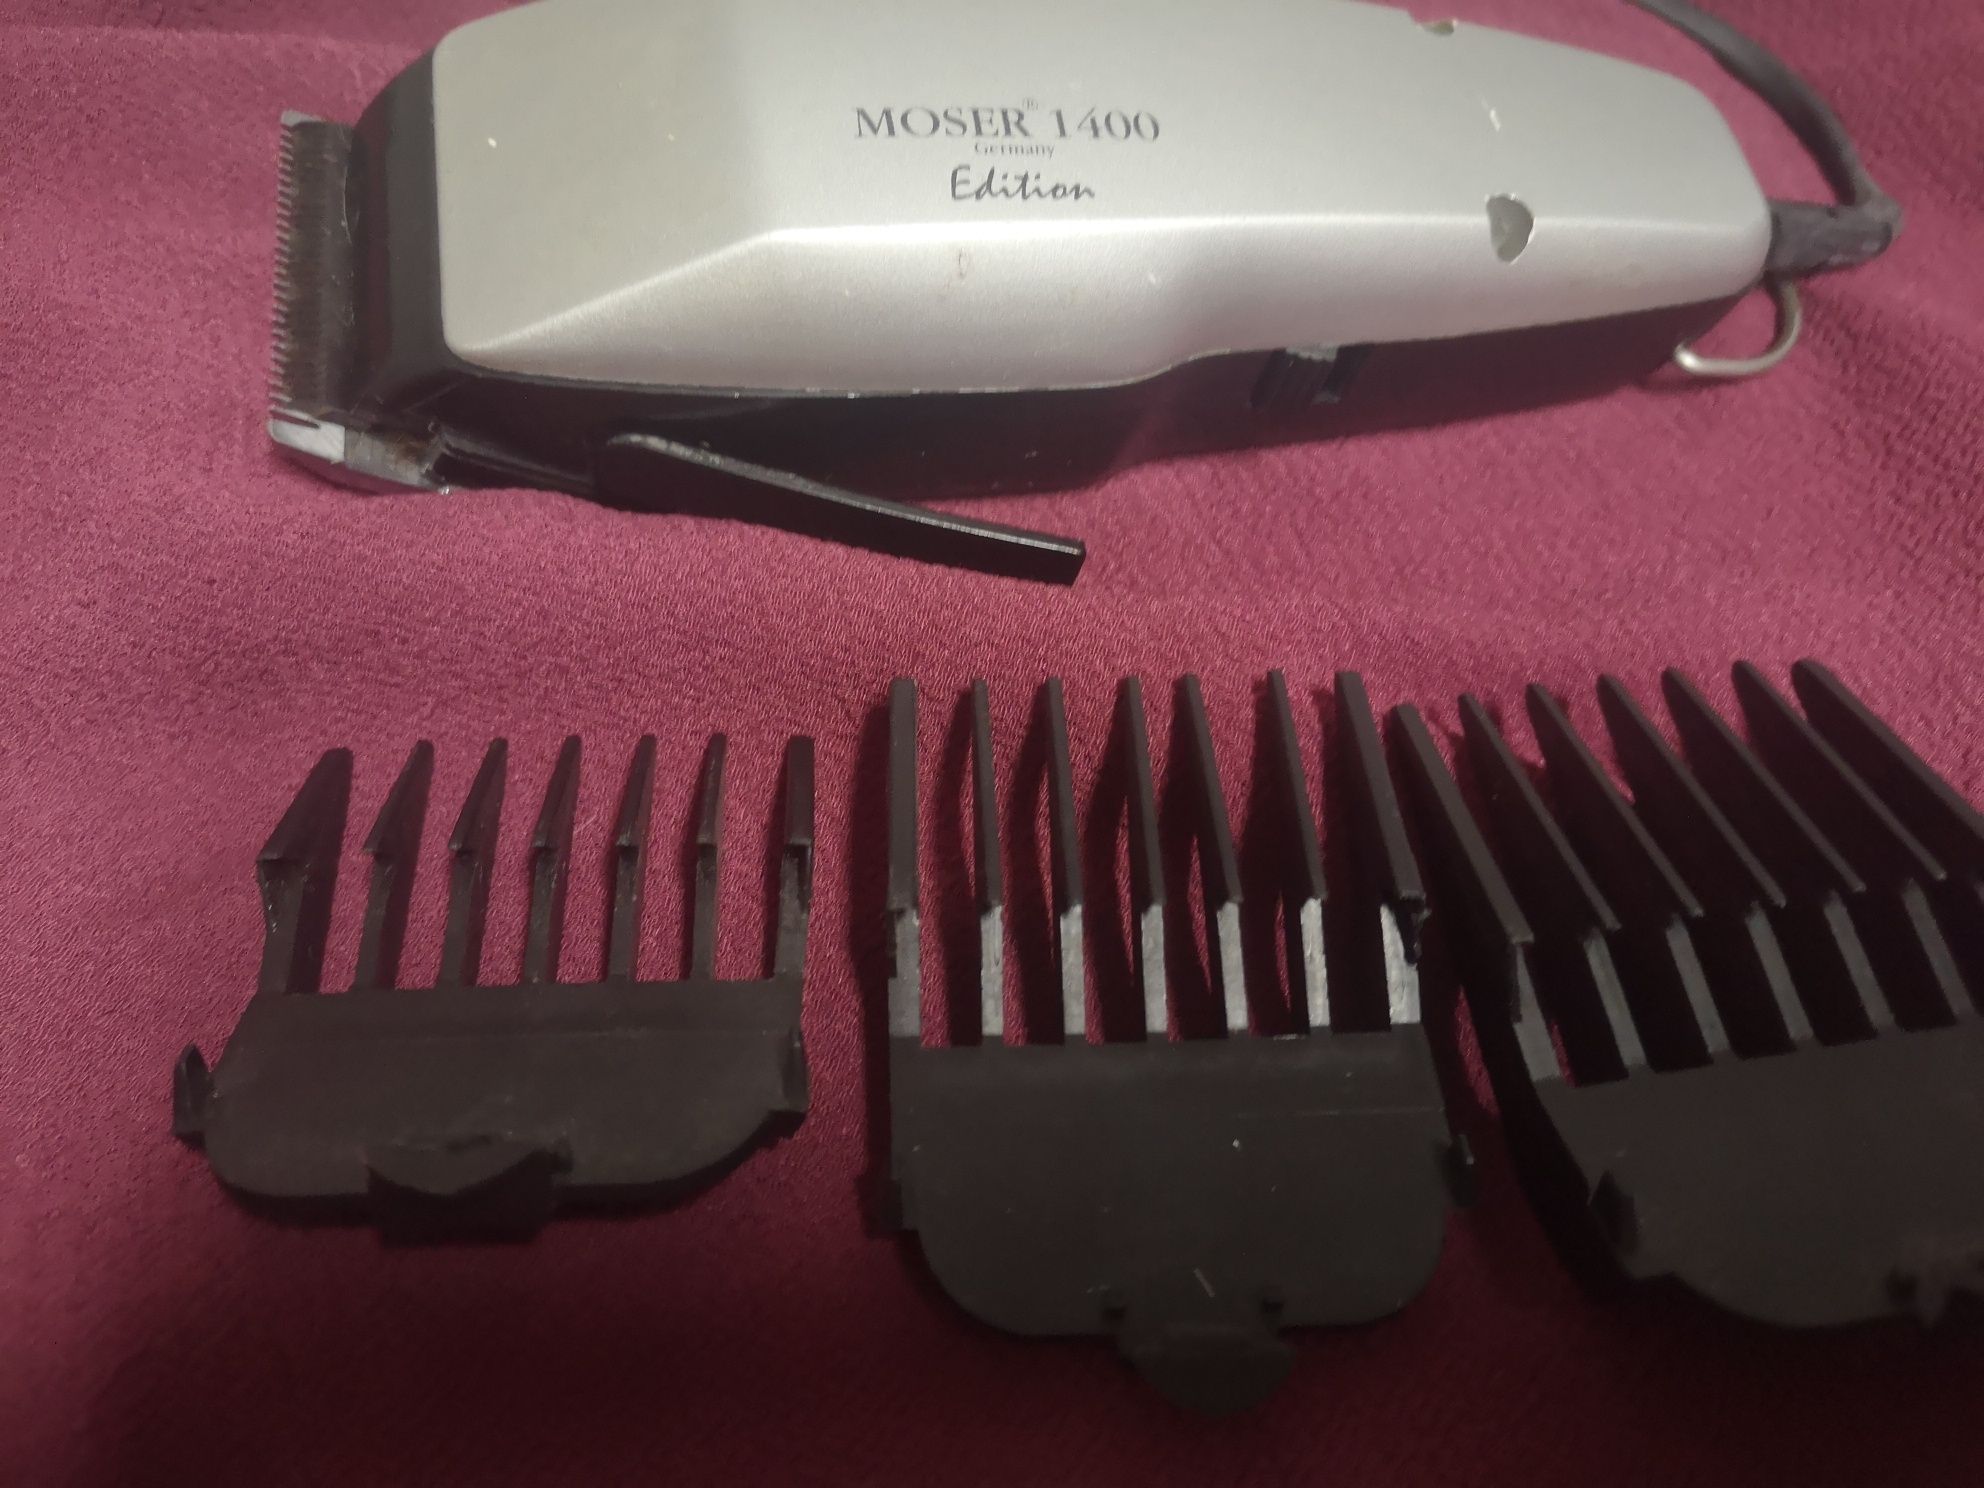 Máquina profissional de cortar cabelo Moser 1400 Edition